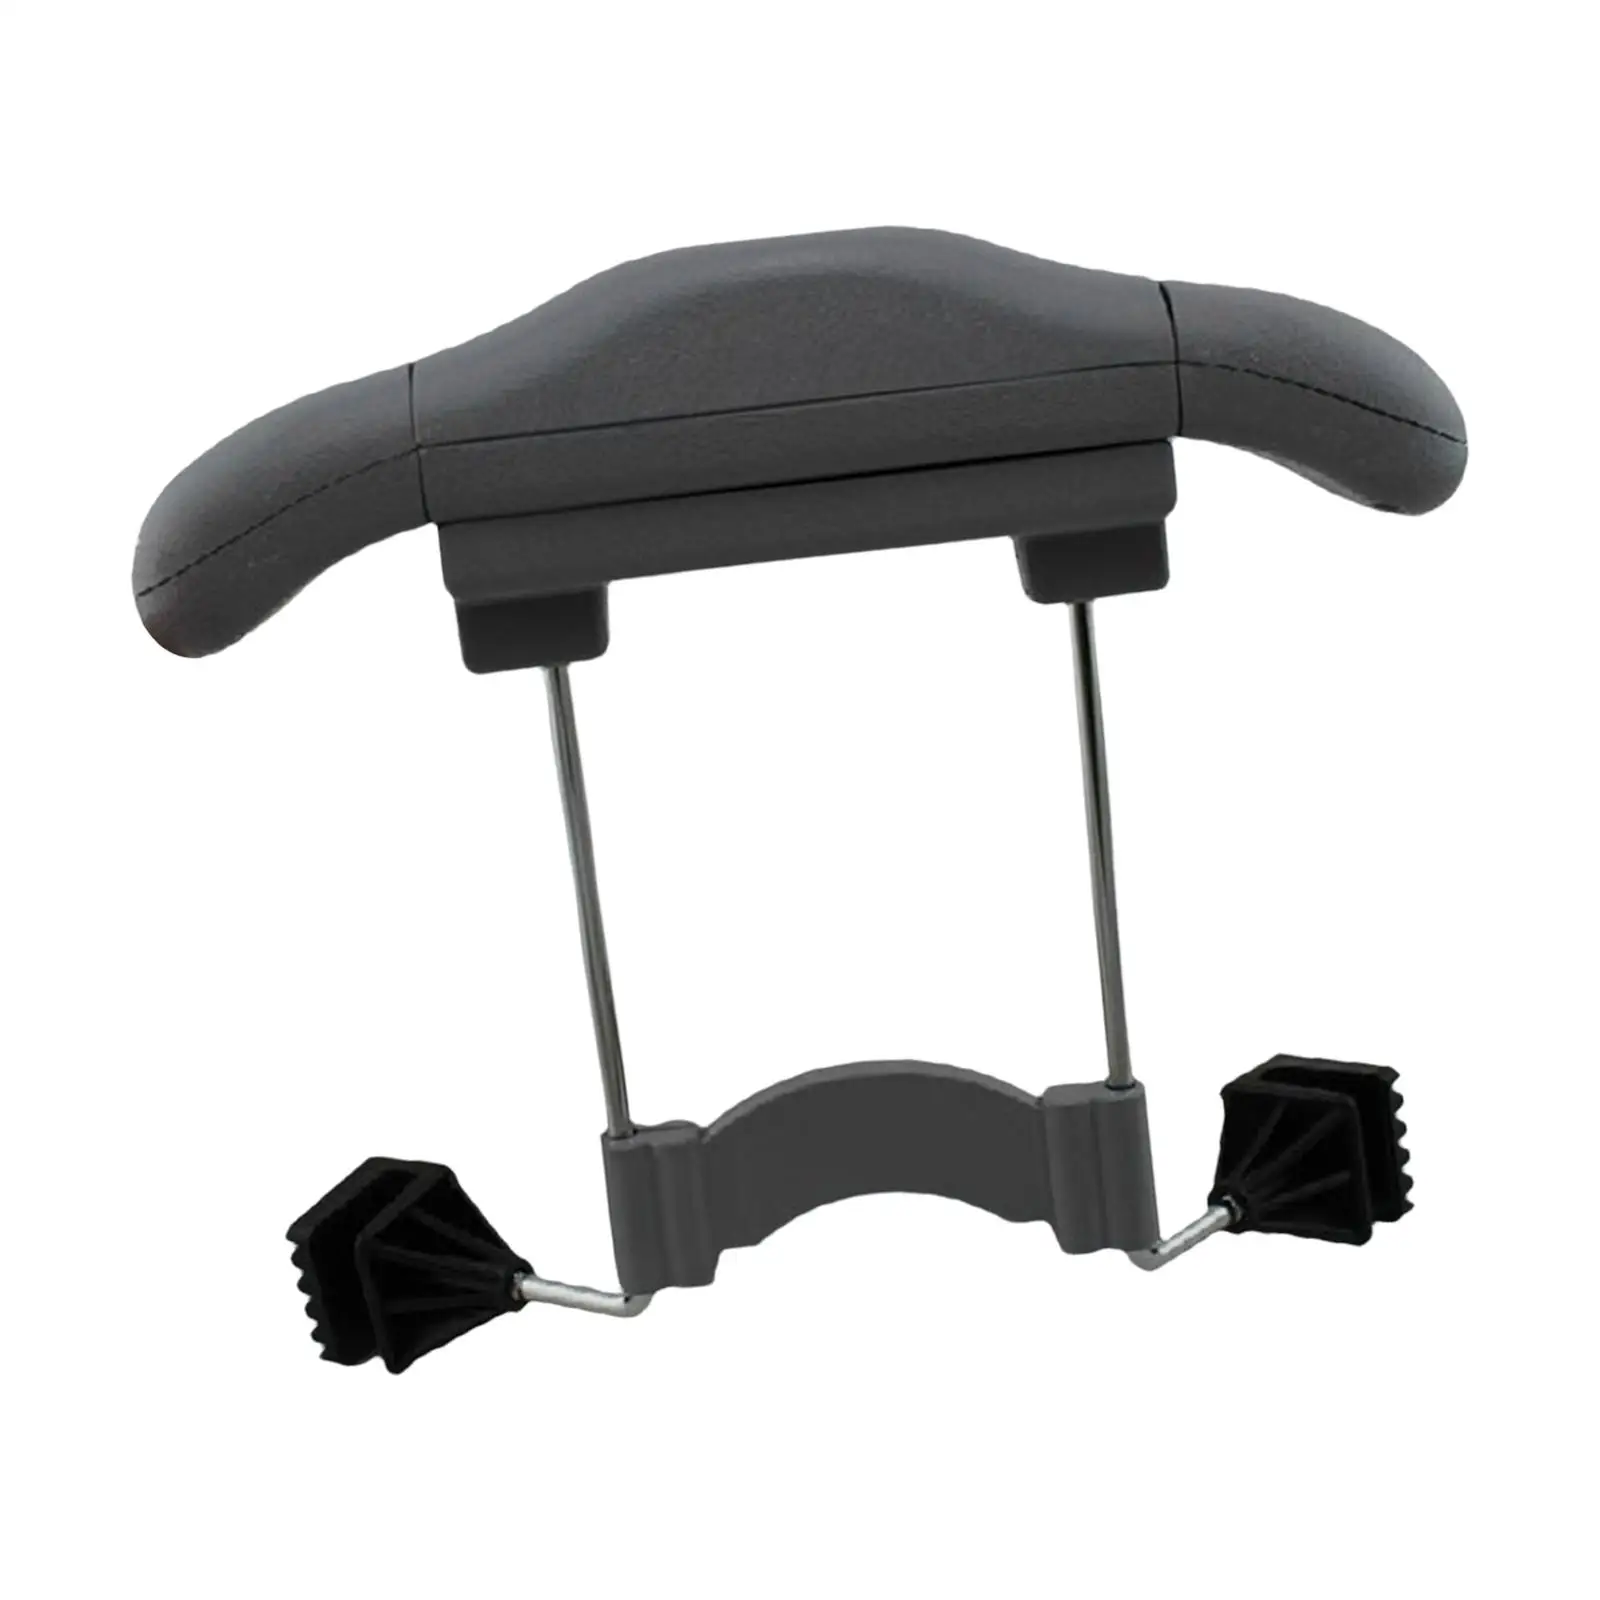 Detachable Car Seat Hanger Holder Headrest Clothes Hanger for RV Purses Sweaters